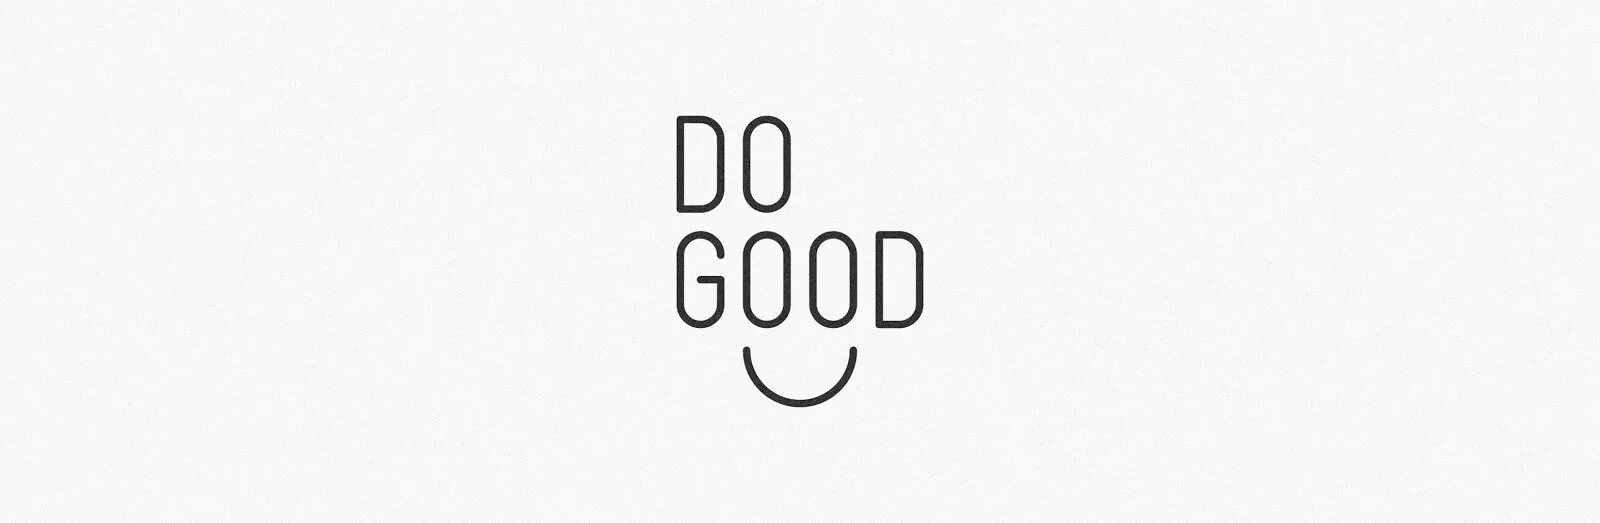 Do good be good. Do good перевод. Be Bad, do good. Do good pictures.